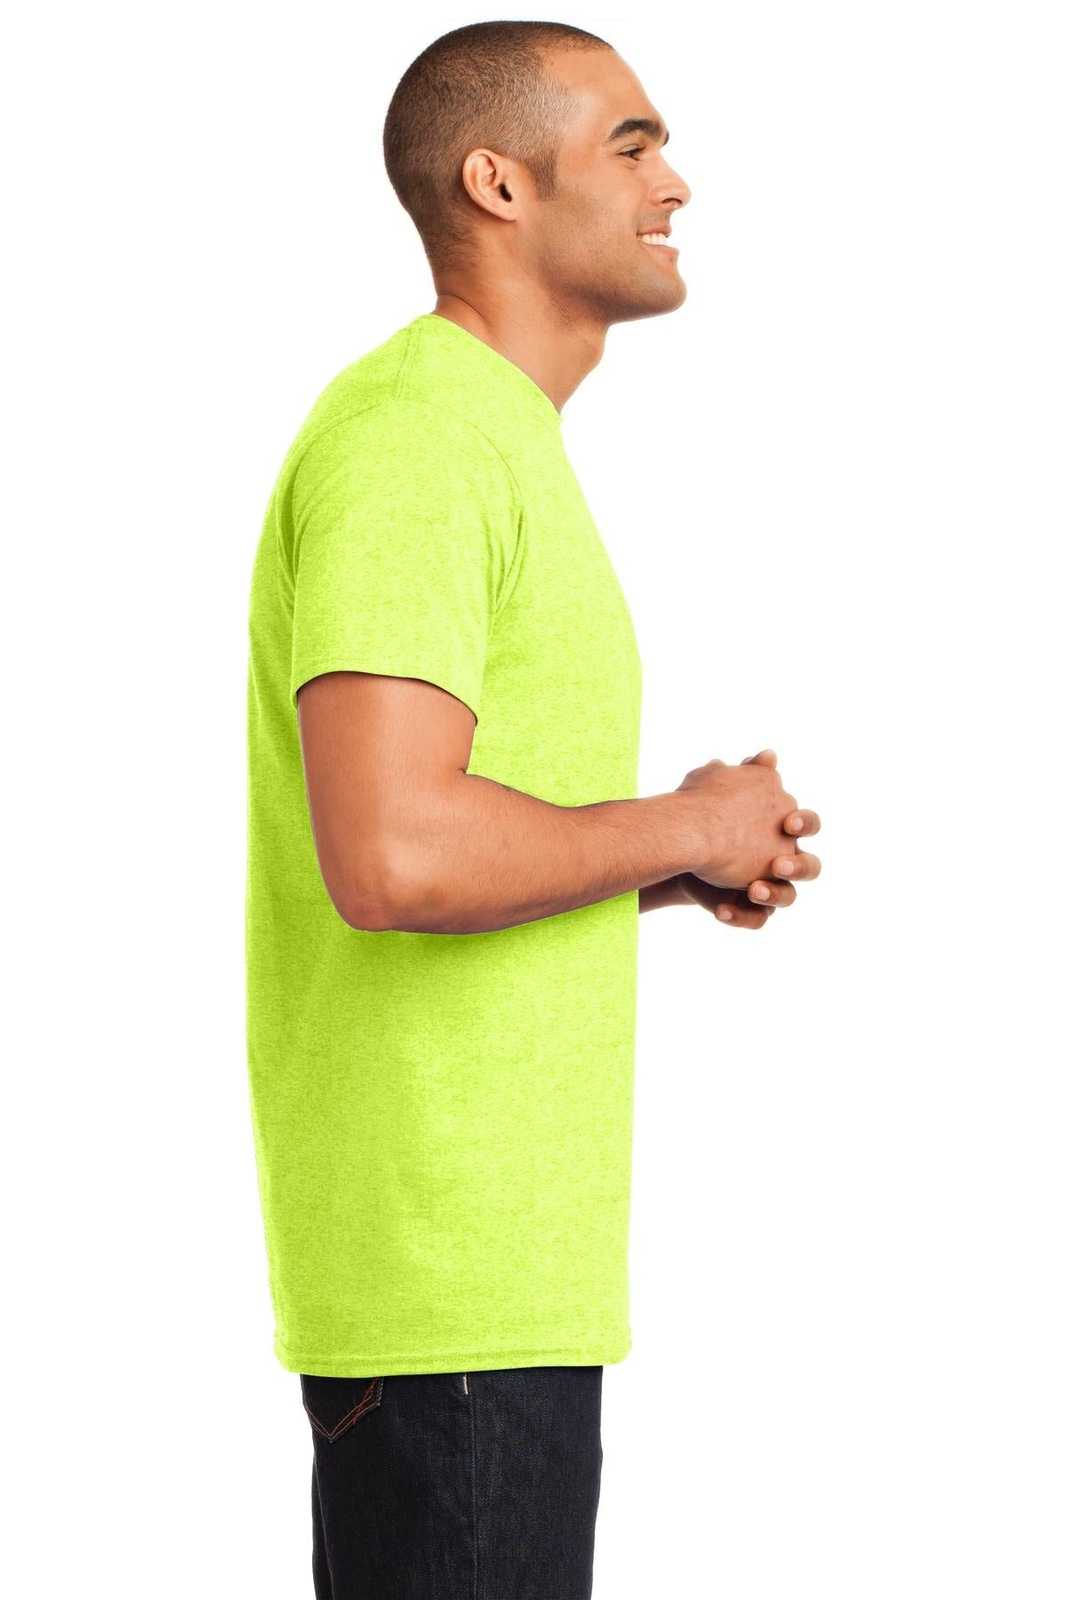 Hanes 4200 X-Temp T-Shirt - Neon Lemon Heather - HIT a Double